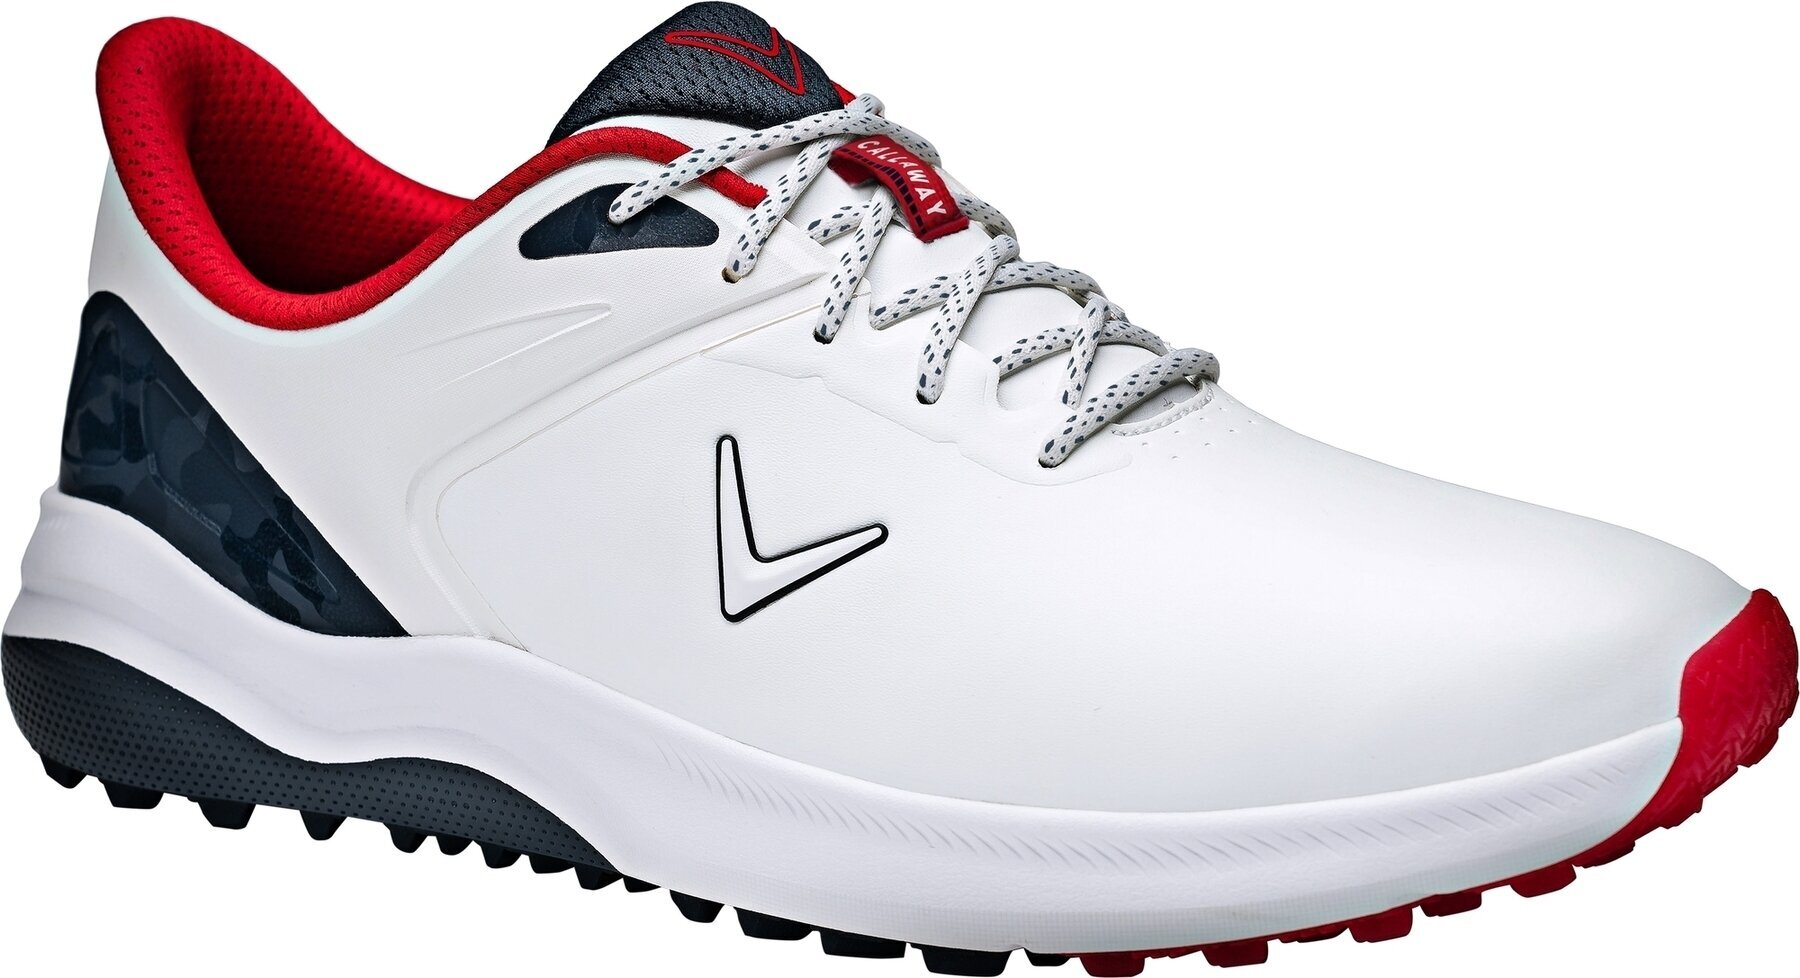 Miesten golfkengät Callaway Lazer Mens Golf Shoes White/Navy/Red 43